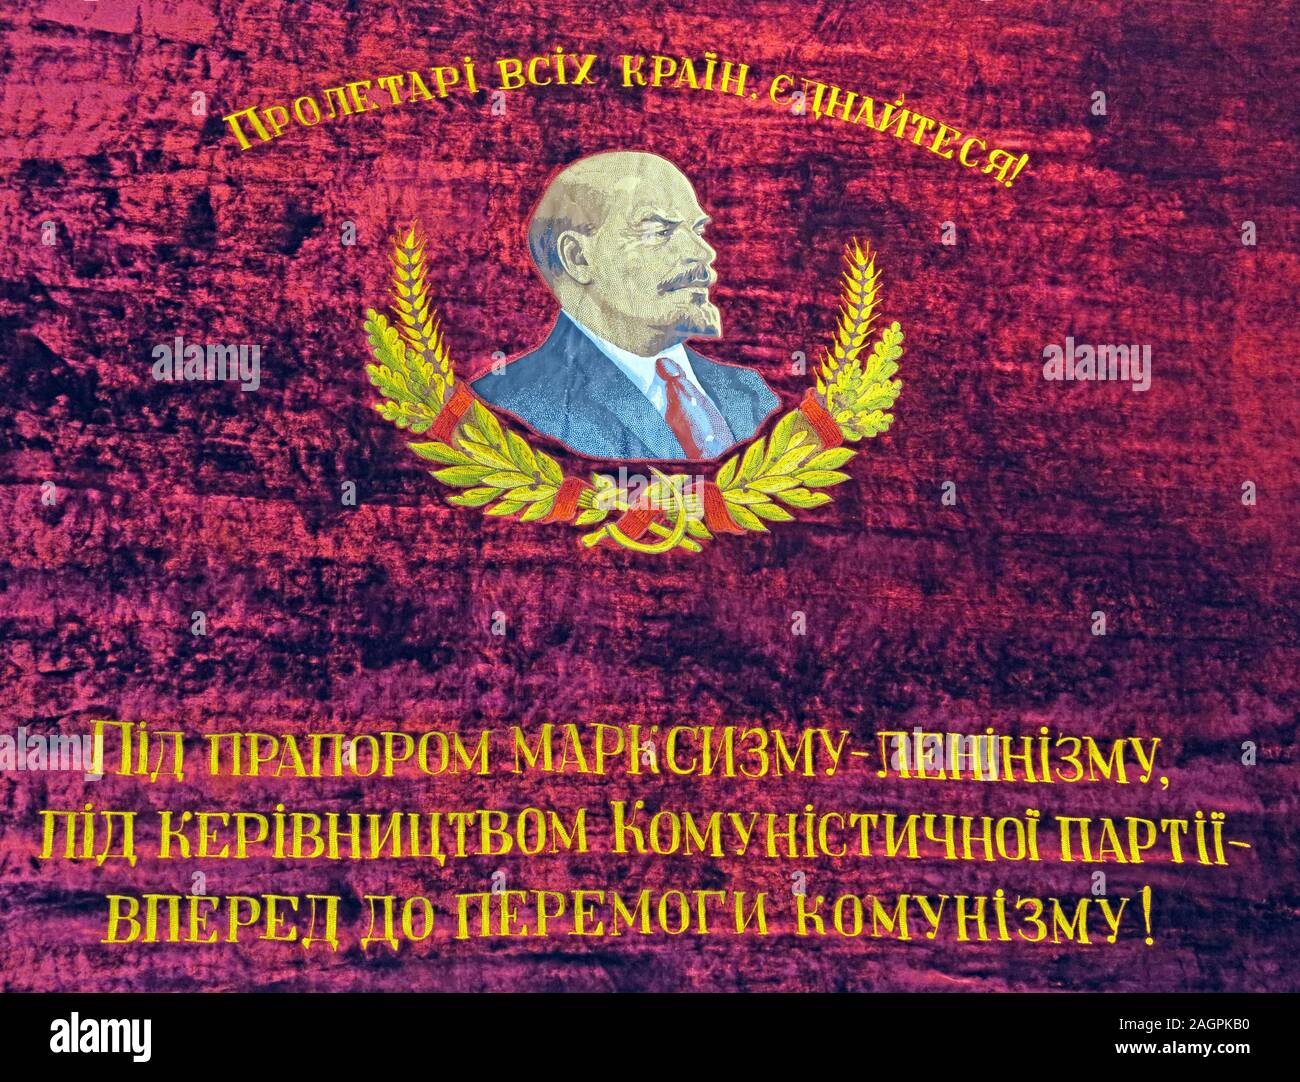 Vladimir Lenin, transfer the world to communism, forward to communism, echoes in the Putin Russian Ukraine invasion February 2022 Stock Photo